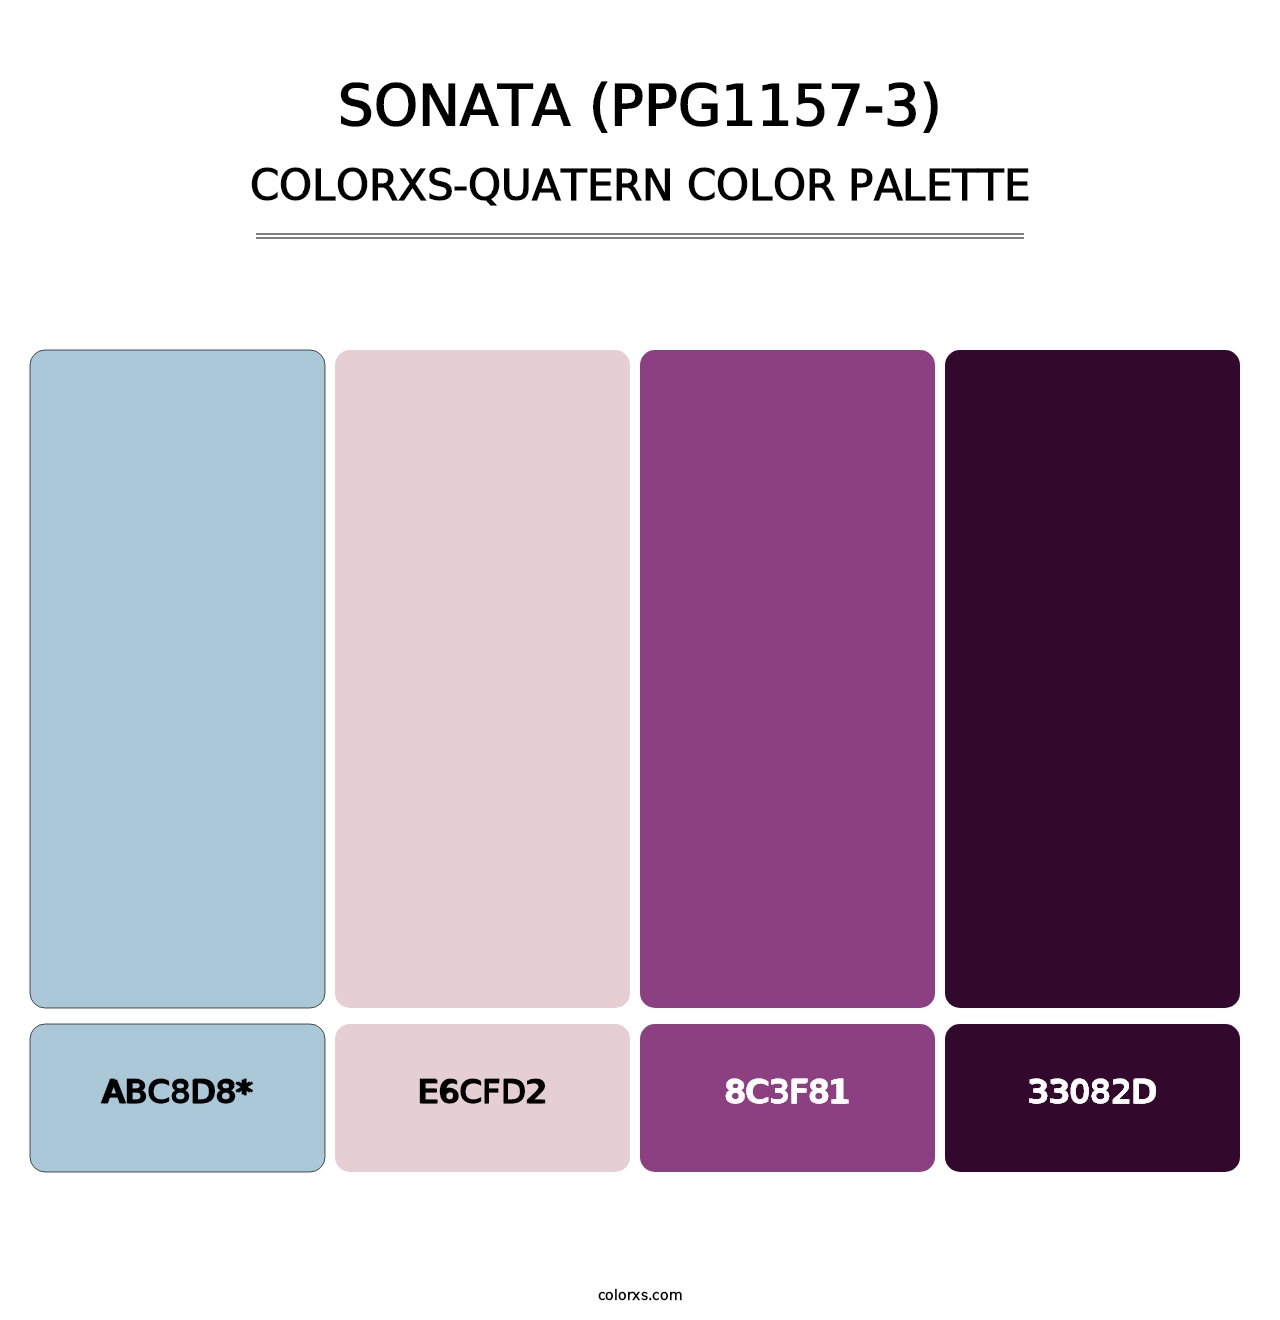 Sonata (PPG1157-3) - Colorxs Quatern Palette